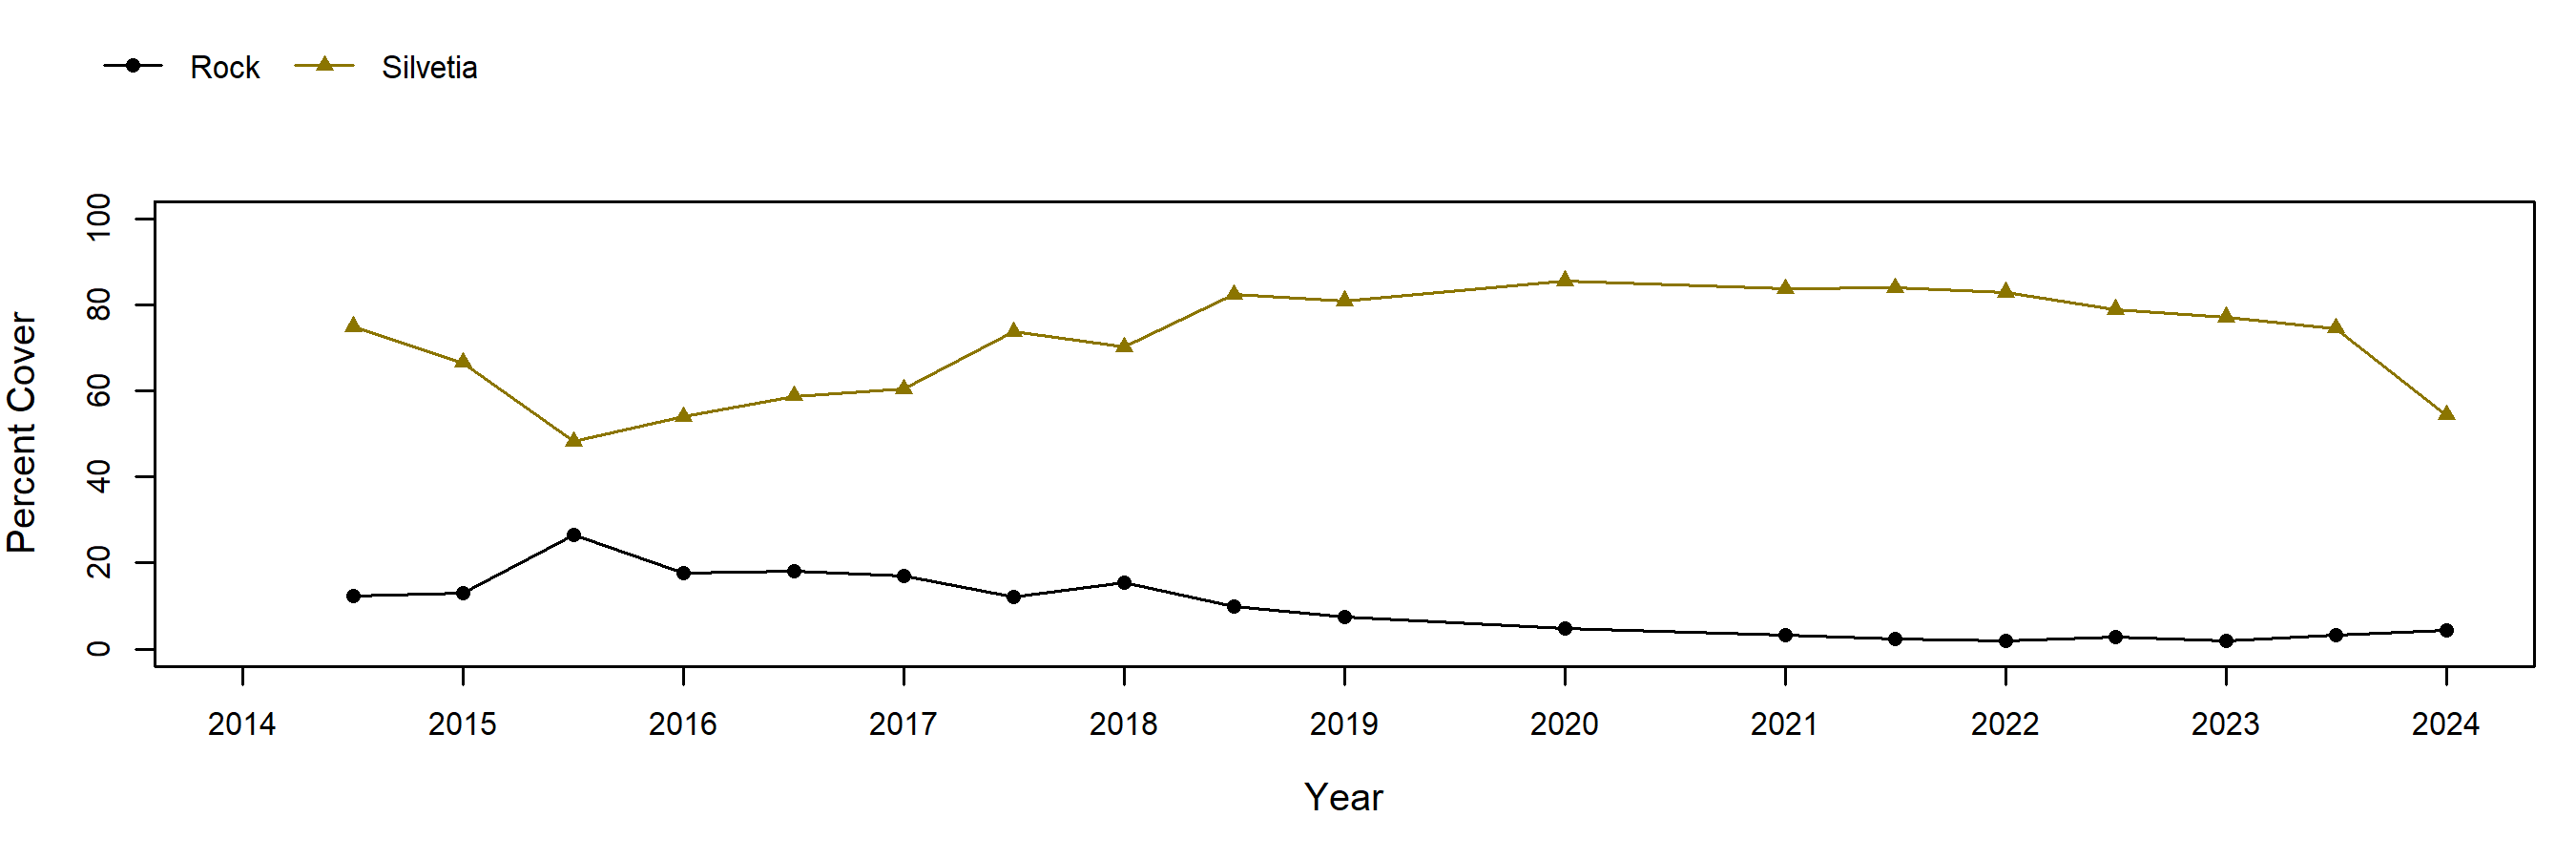 Anchor Point Silvetia trend plot